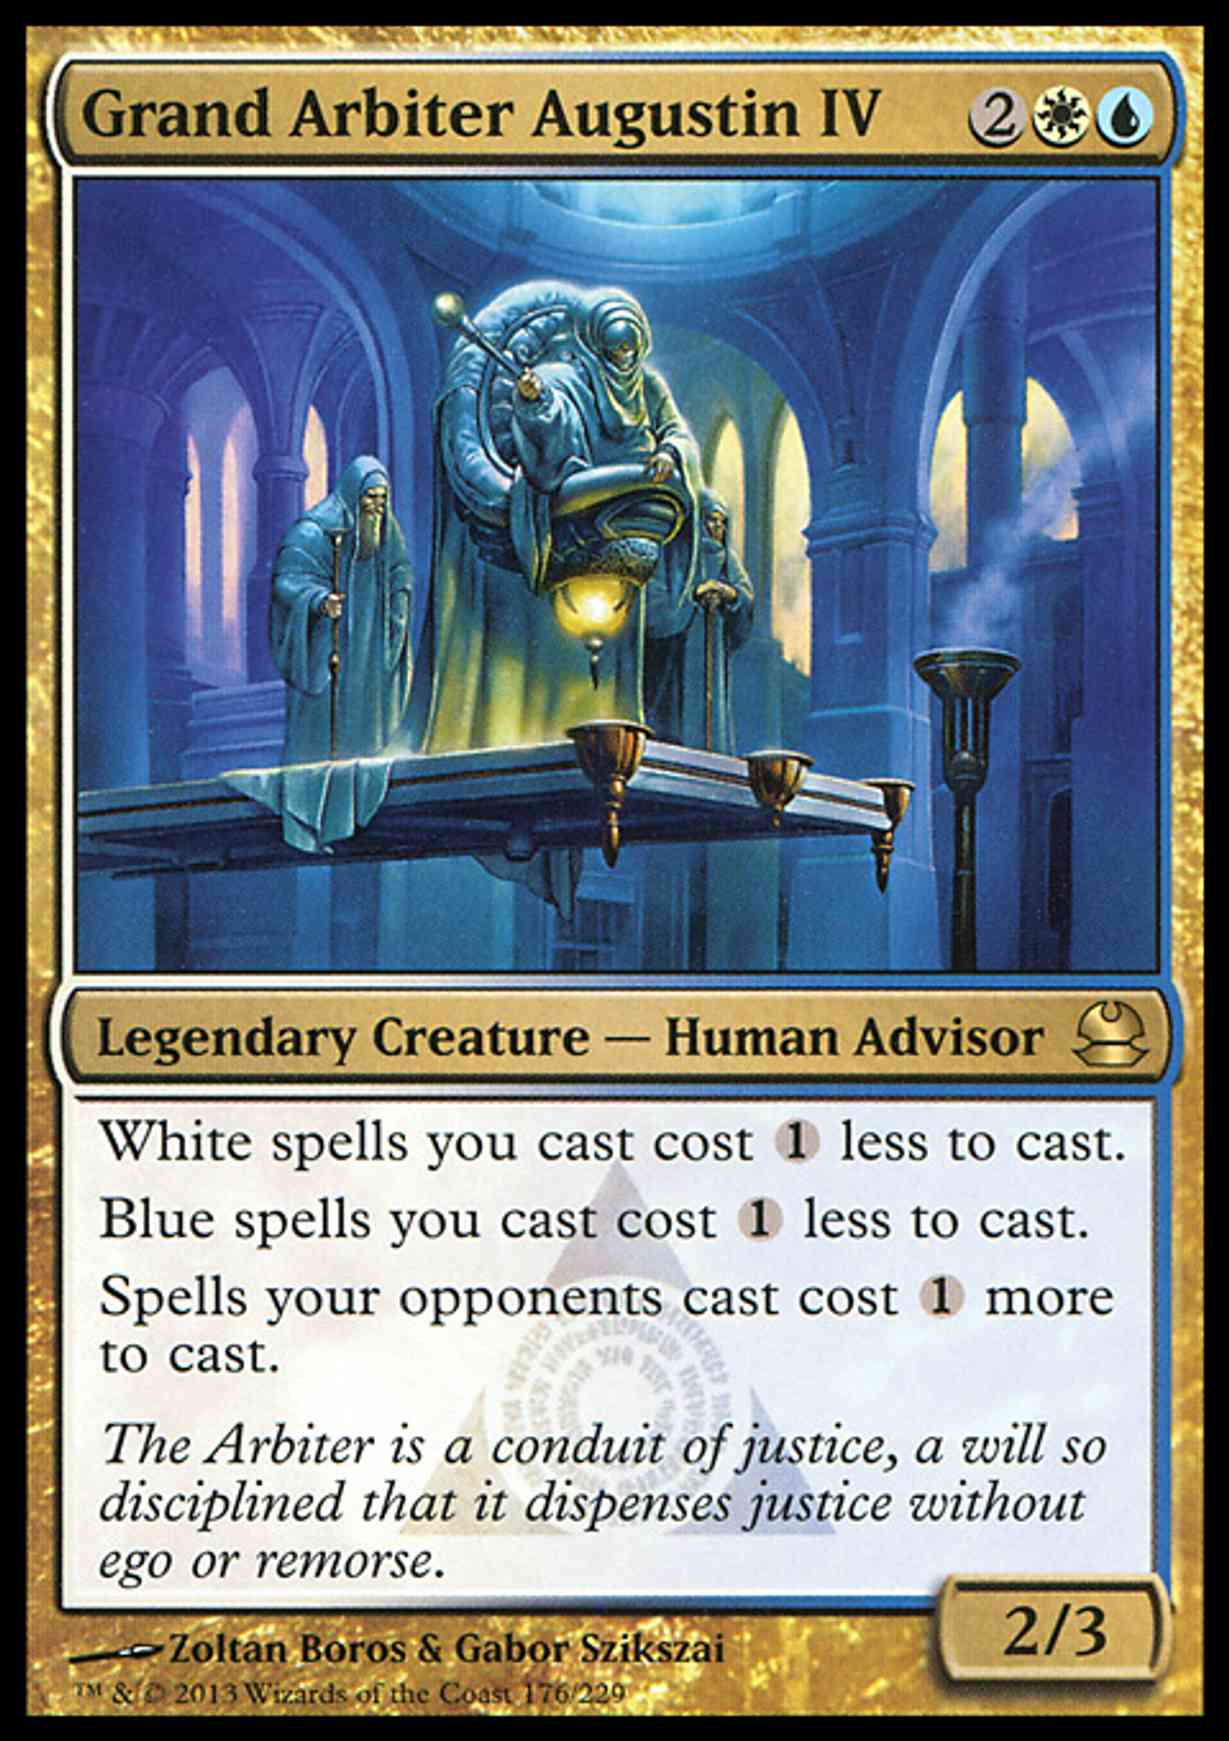 Grand Arbiter Augustin IV magic card front